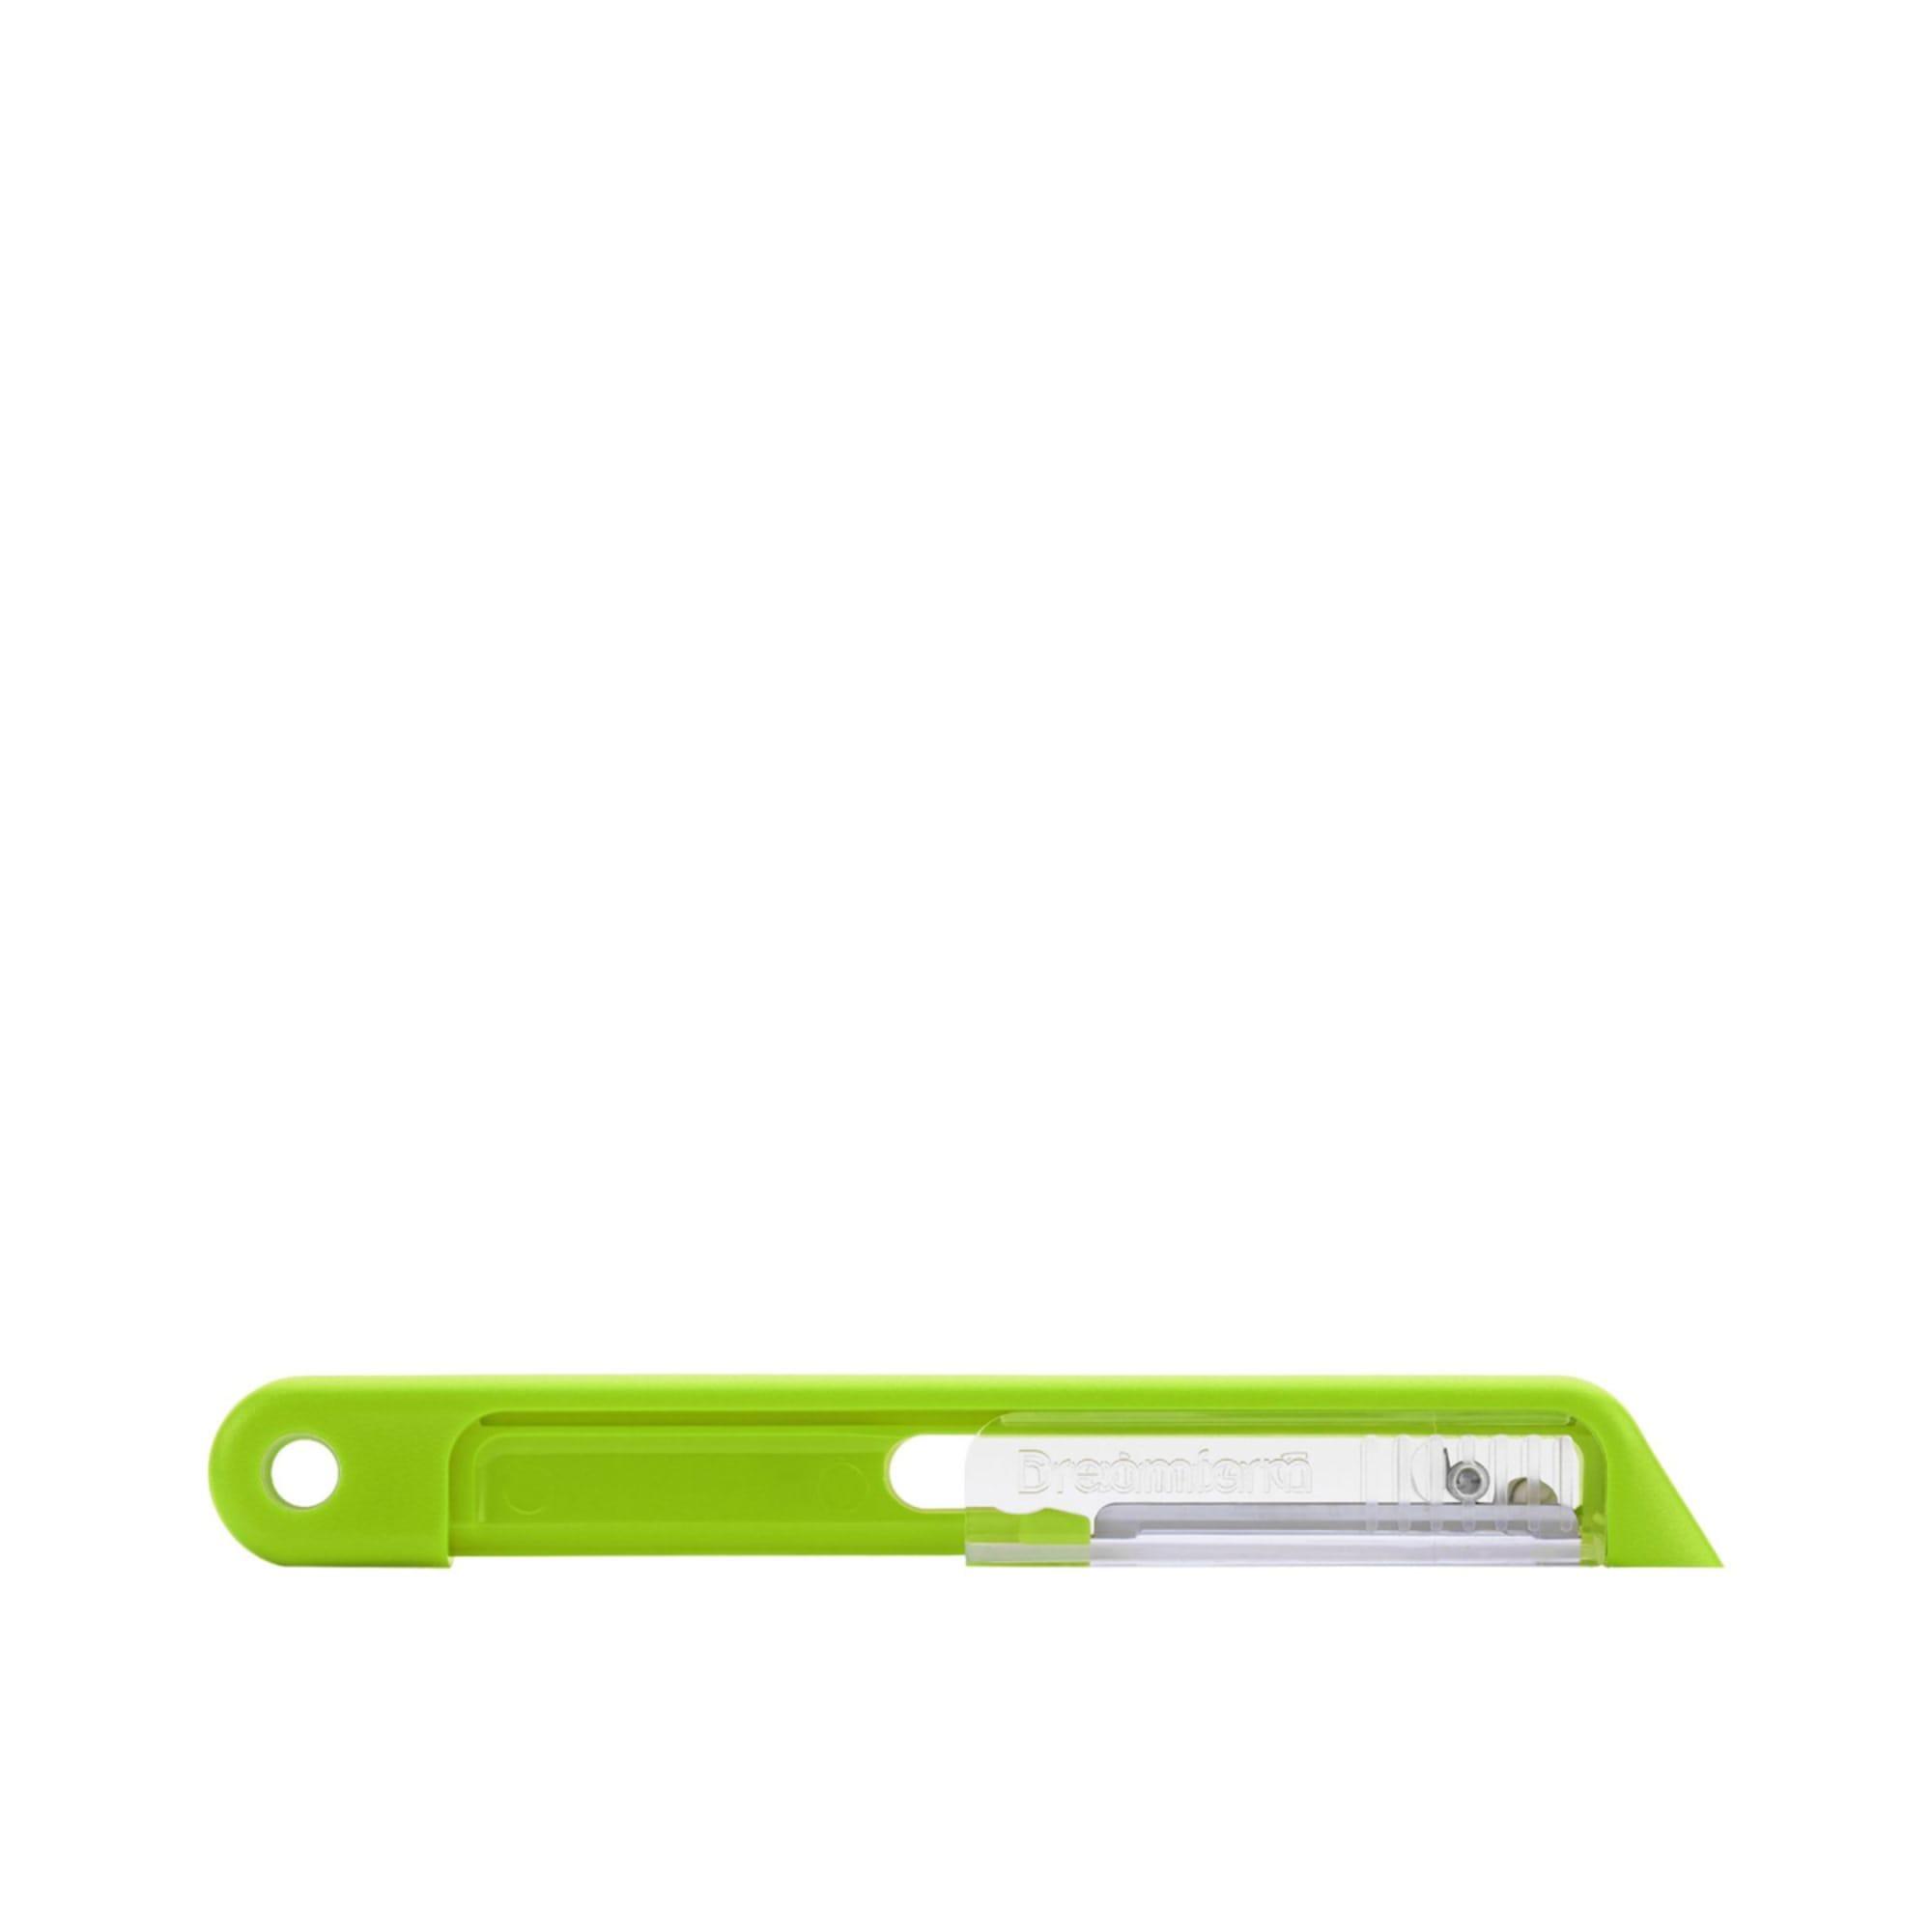 Dreamfarm Sharple Sharp Safety Peeler Green Image 6